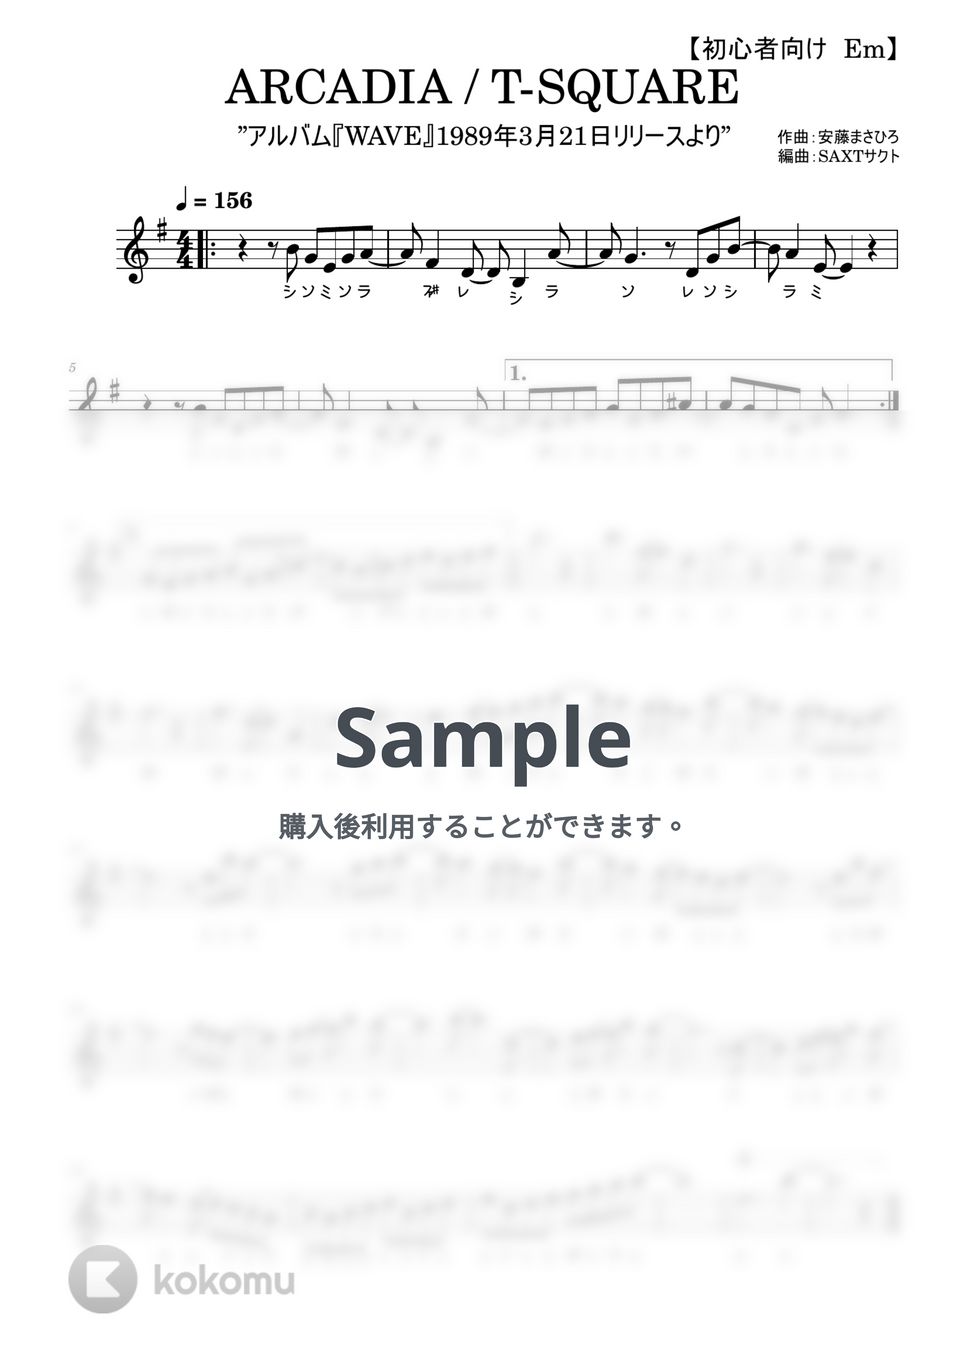 T-SQUARE - ARCADIA (めちゃラク譜) by SAXT